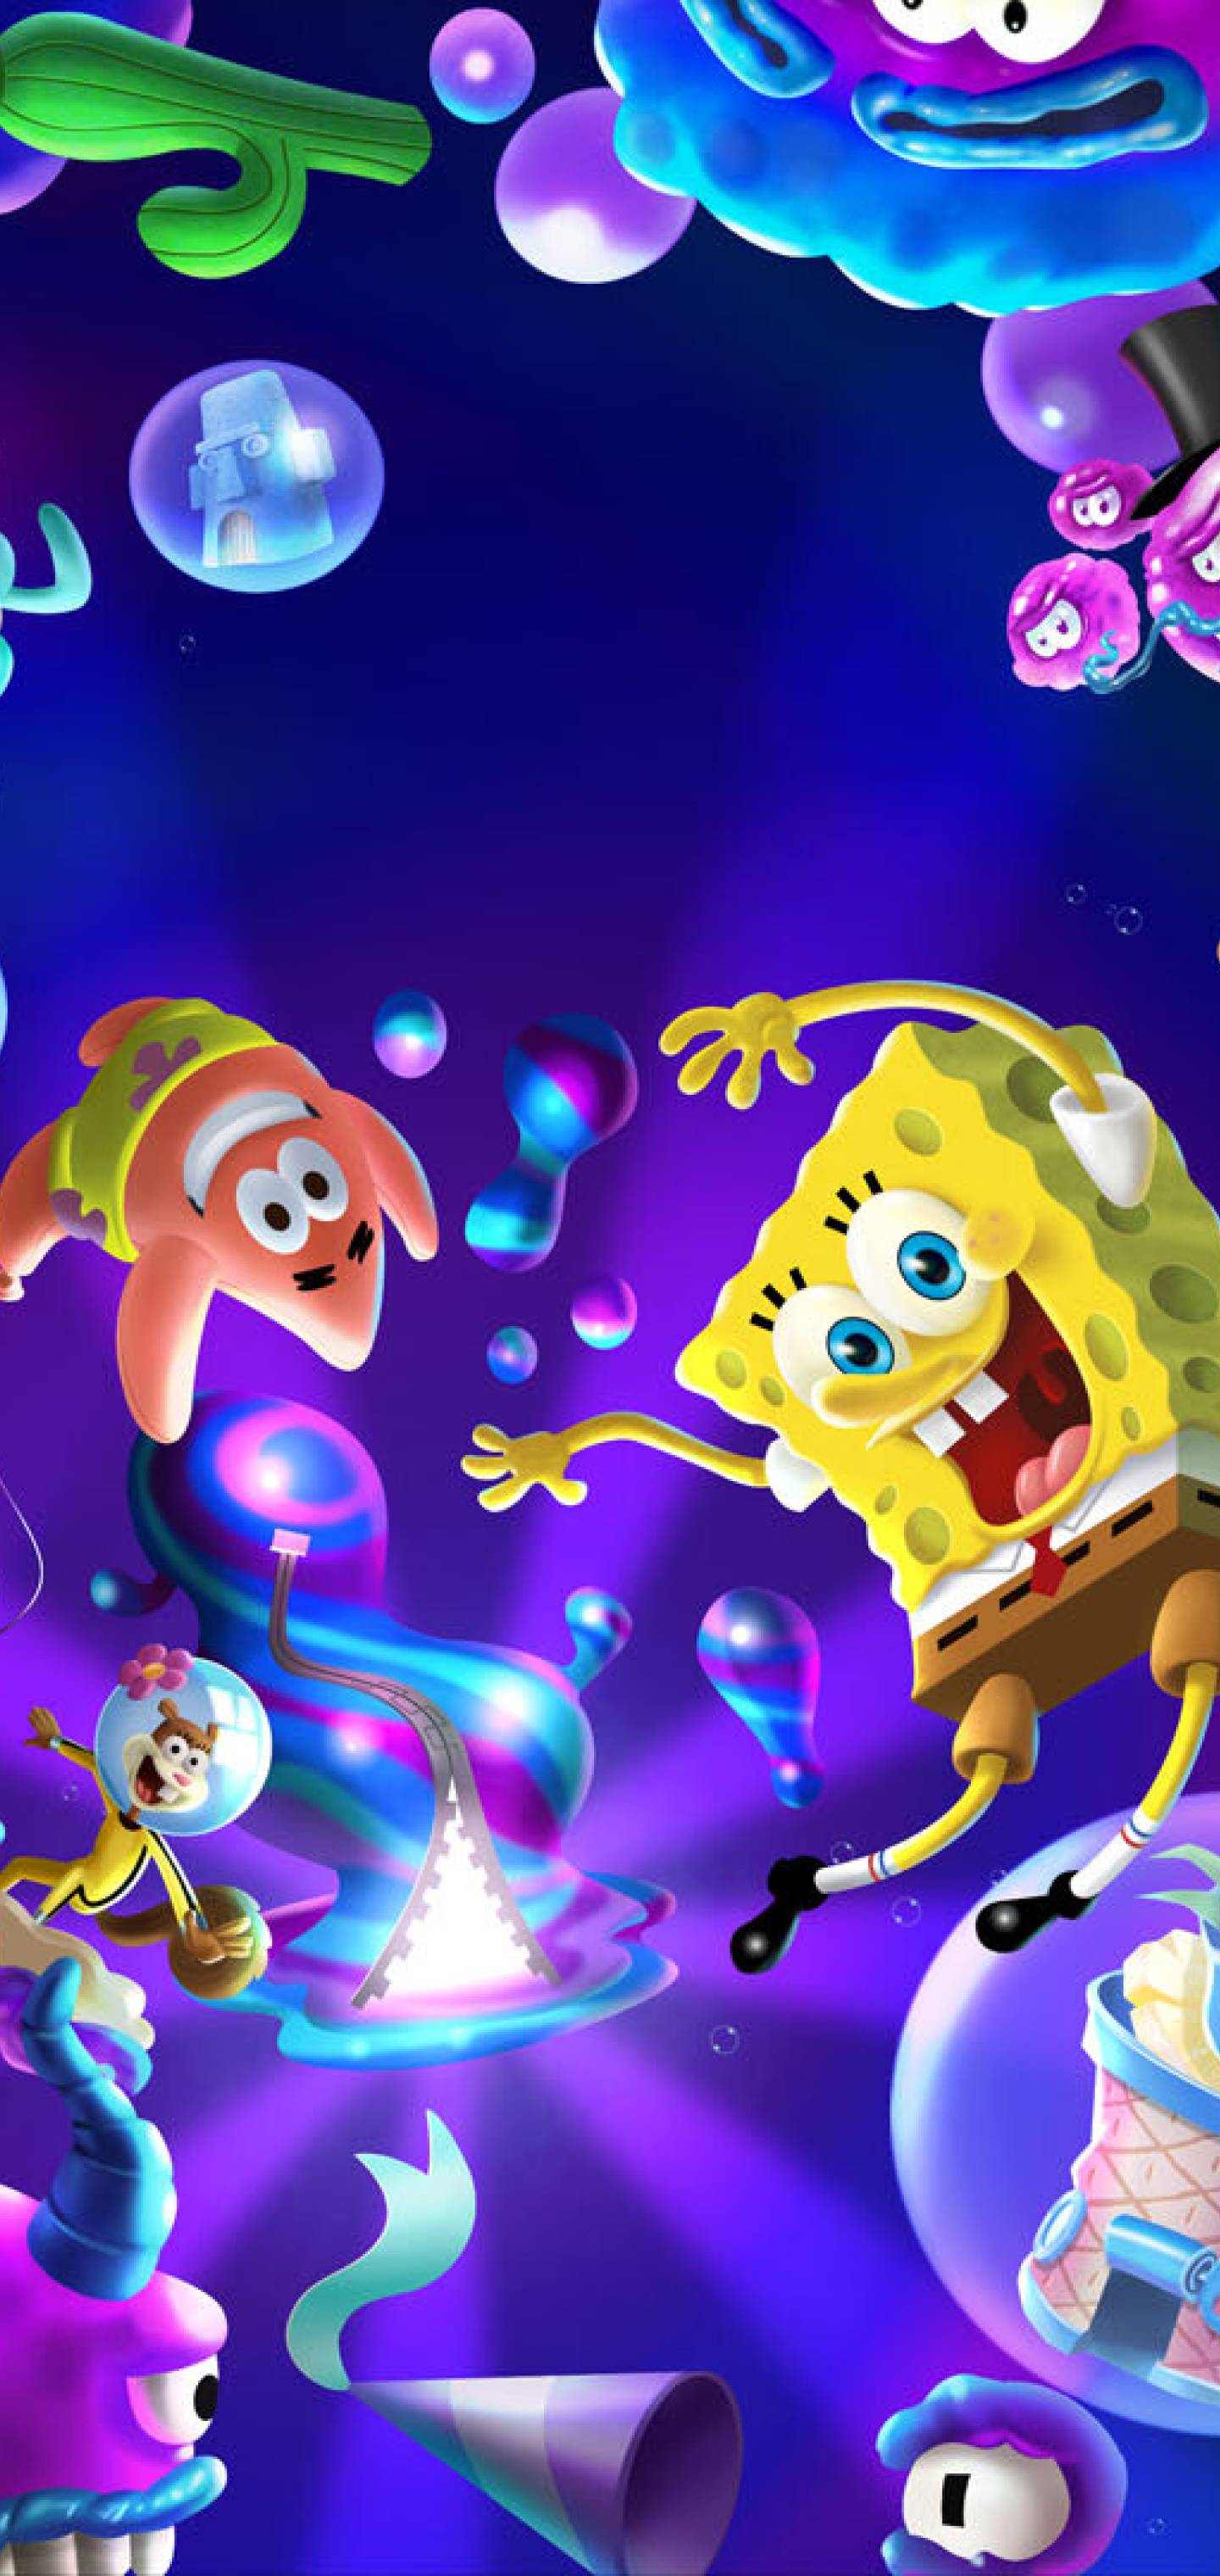 SpongeBob SquarePants 2021 Gaming 1440x3040 Resolution Wallpaper, HD Games 4K Wallpaper, Image, Photo and Background